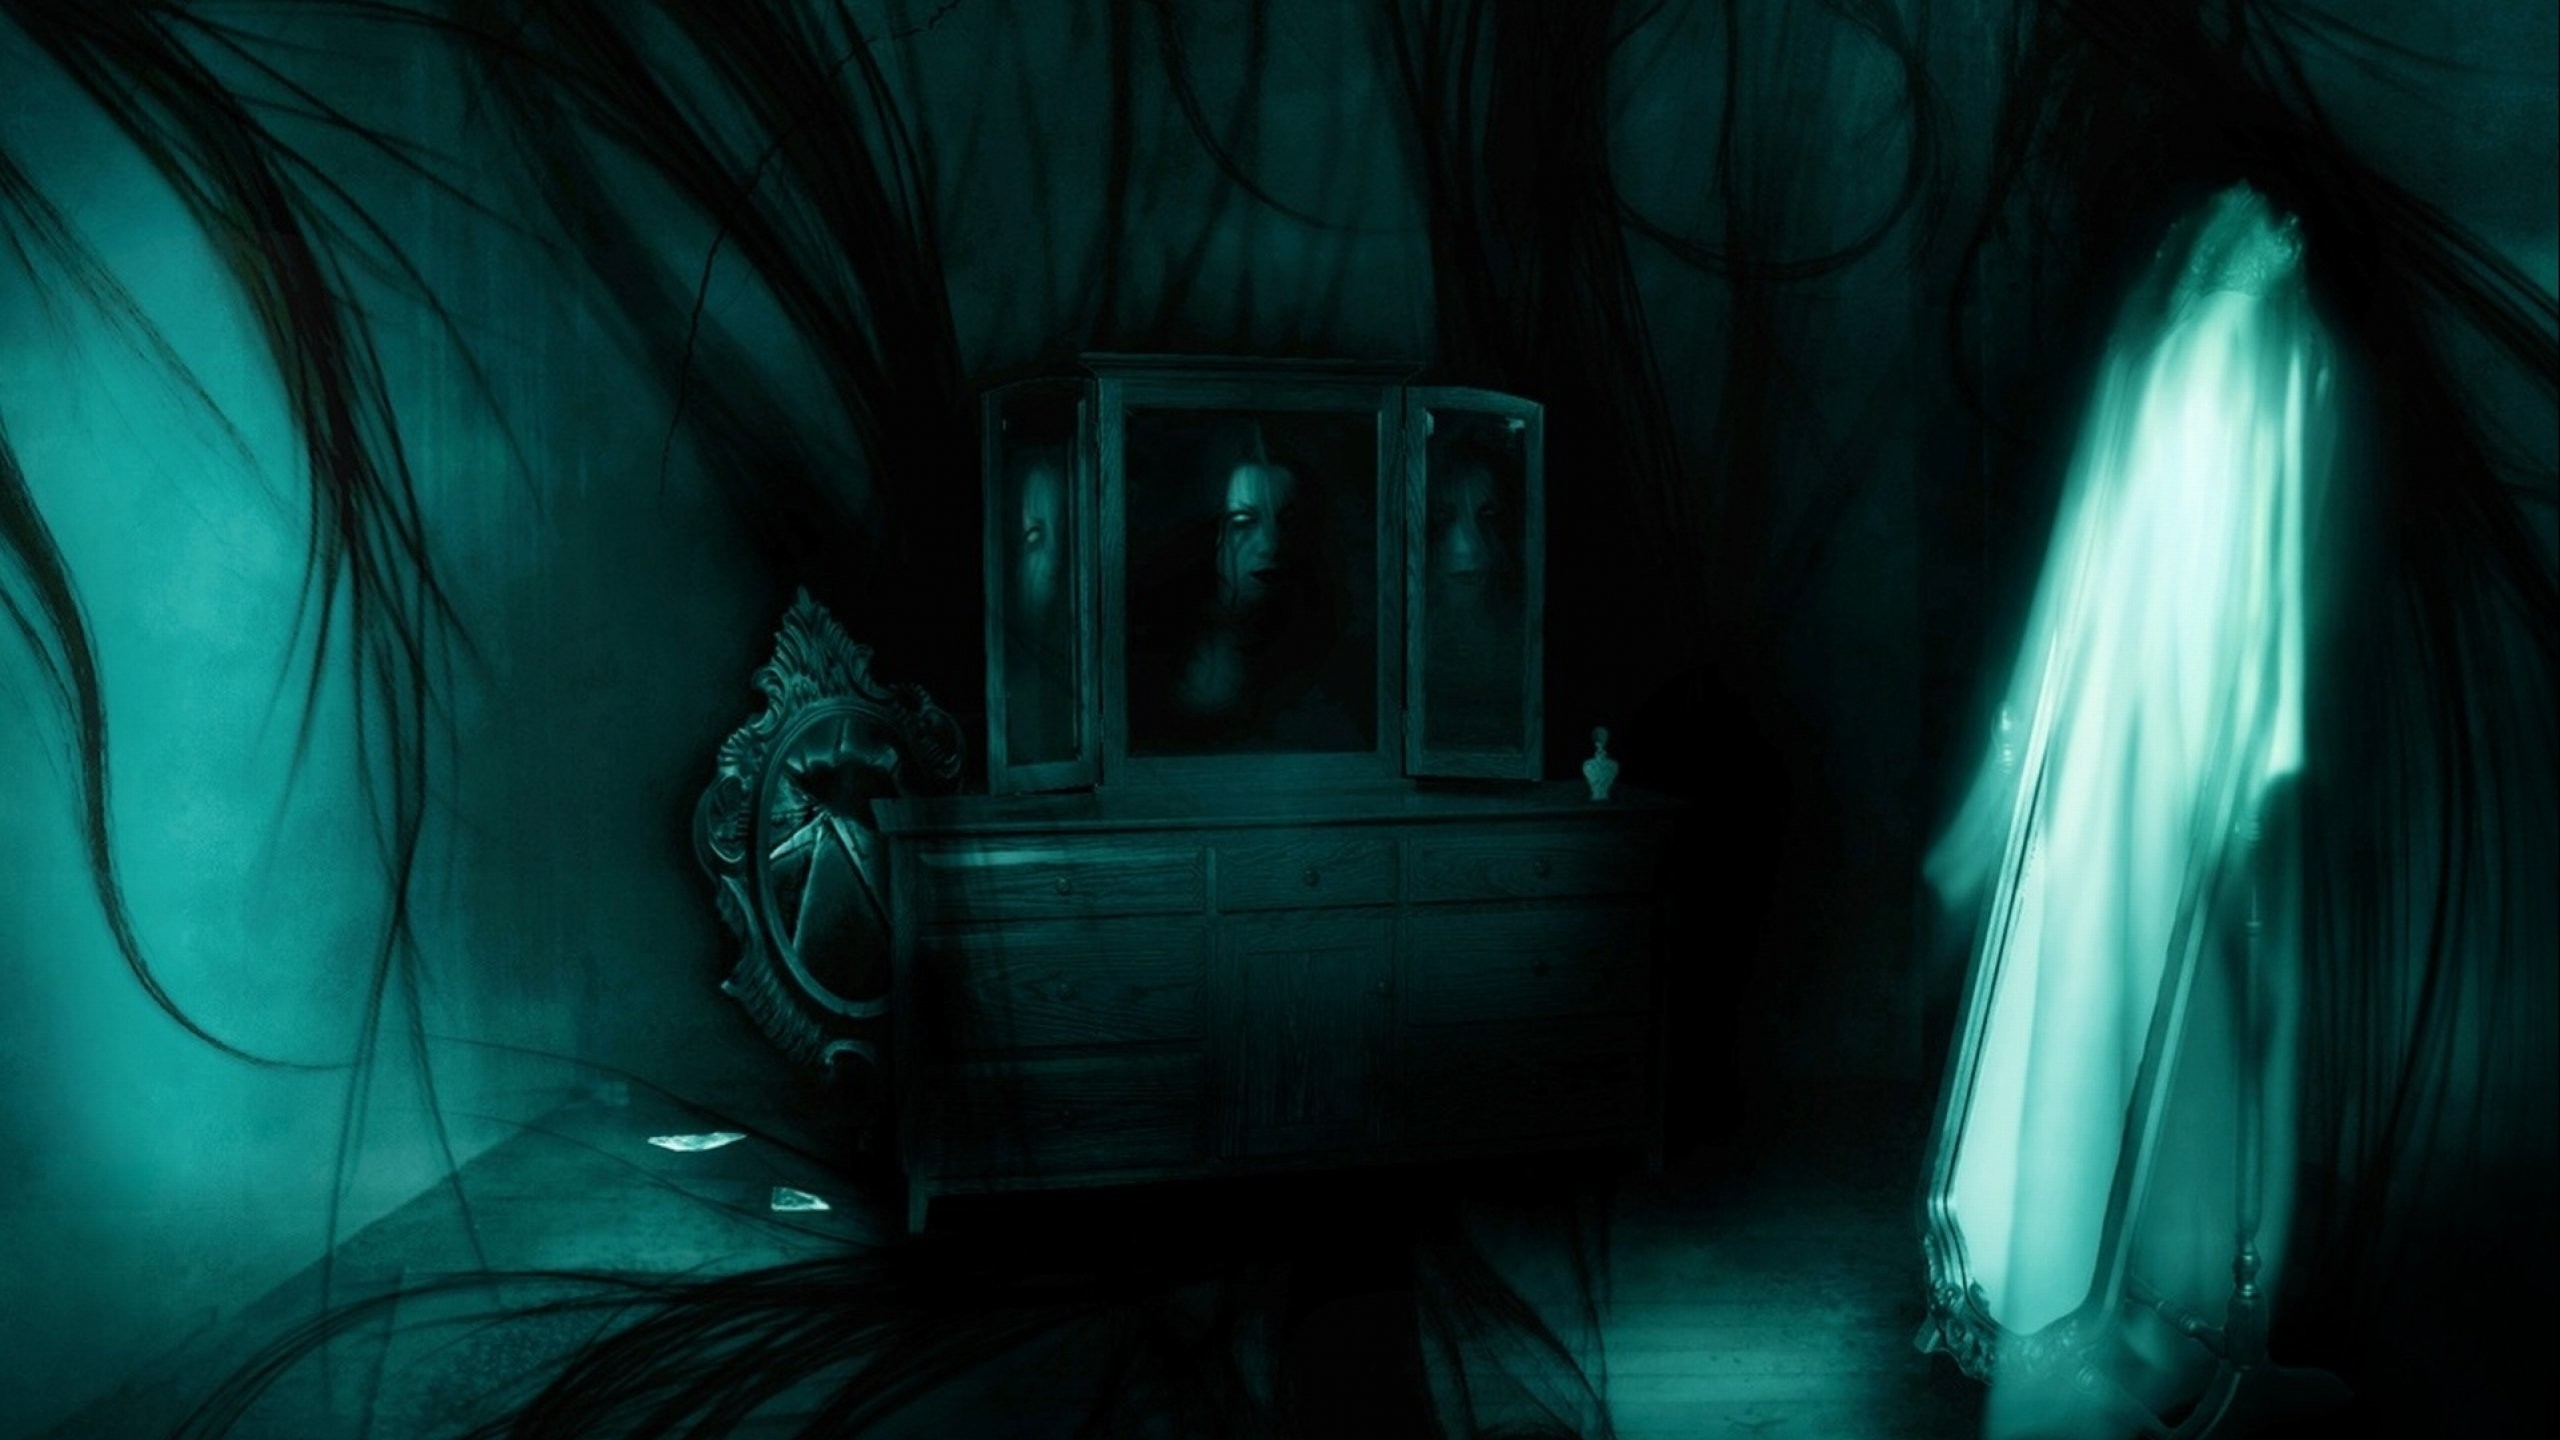 2560x1440 dark-ghost-fantasy-art-artwork-horror-spooky-creepy-halloween-gothic- wallpaper-1.jpg (2560Ã1440) | cool stuff | Pinterest | Creepy ghost, ...